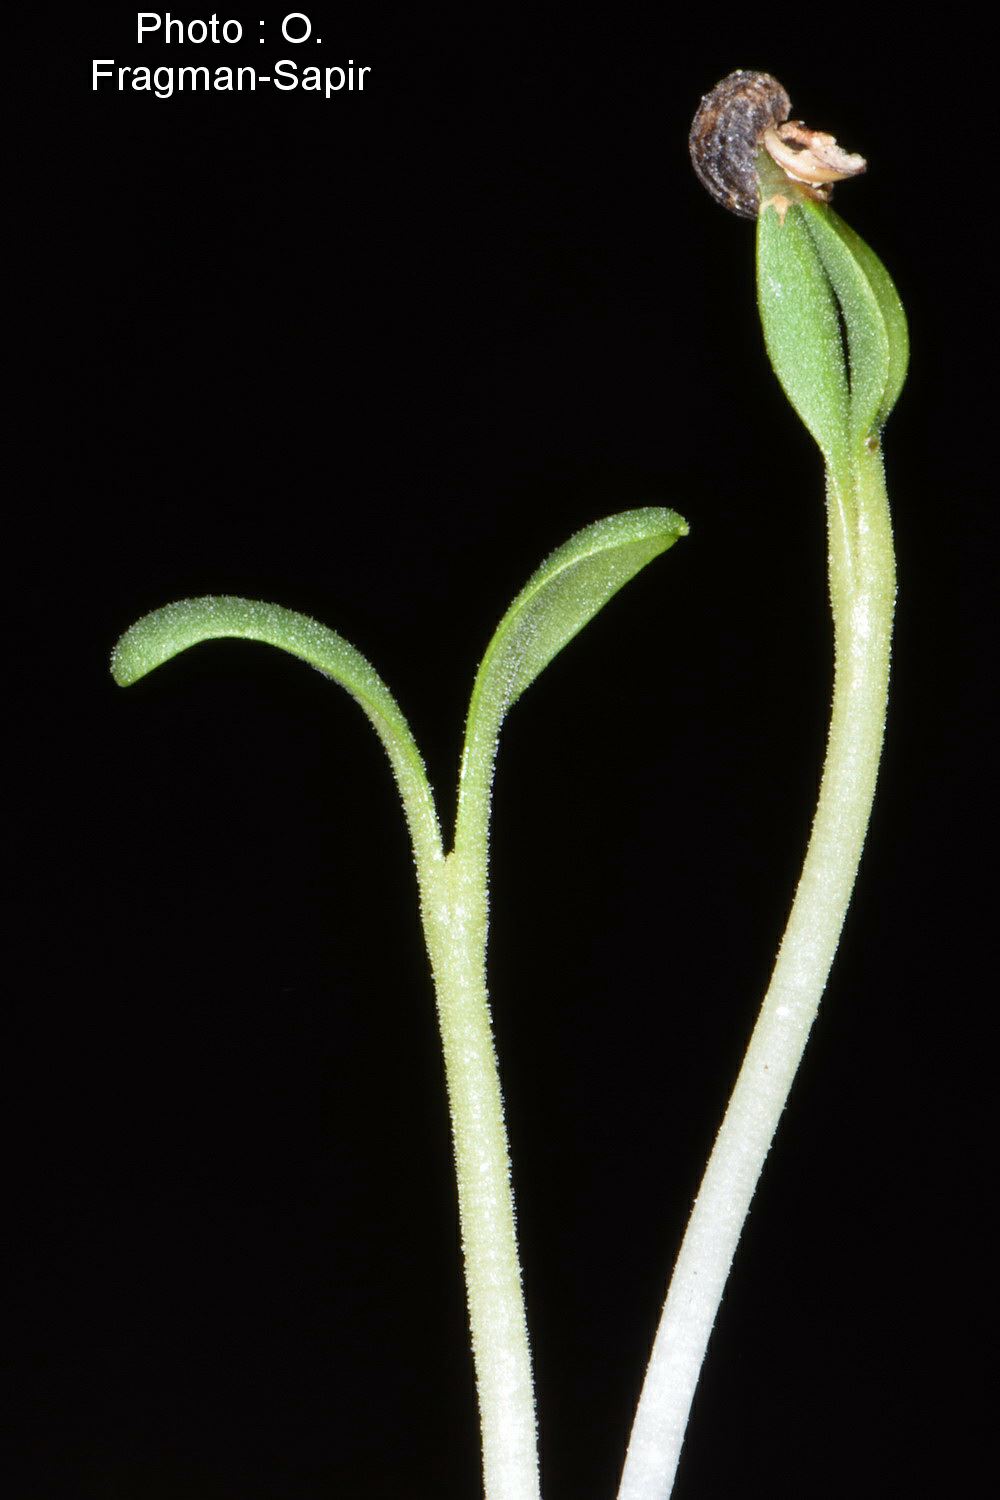 Teucrium parviflorum - Small-flowered Germander, געדה זעירת-פרחים, געדת זעירת-פרחים